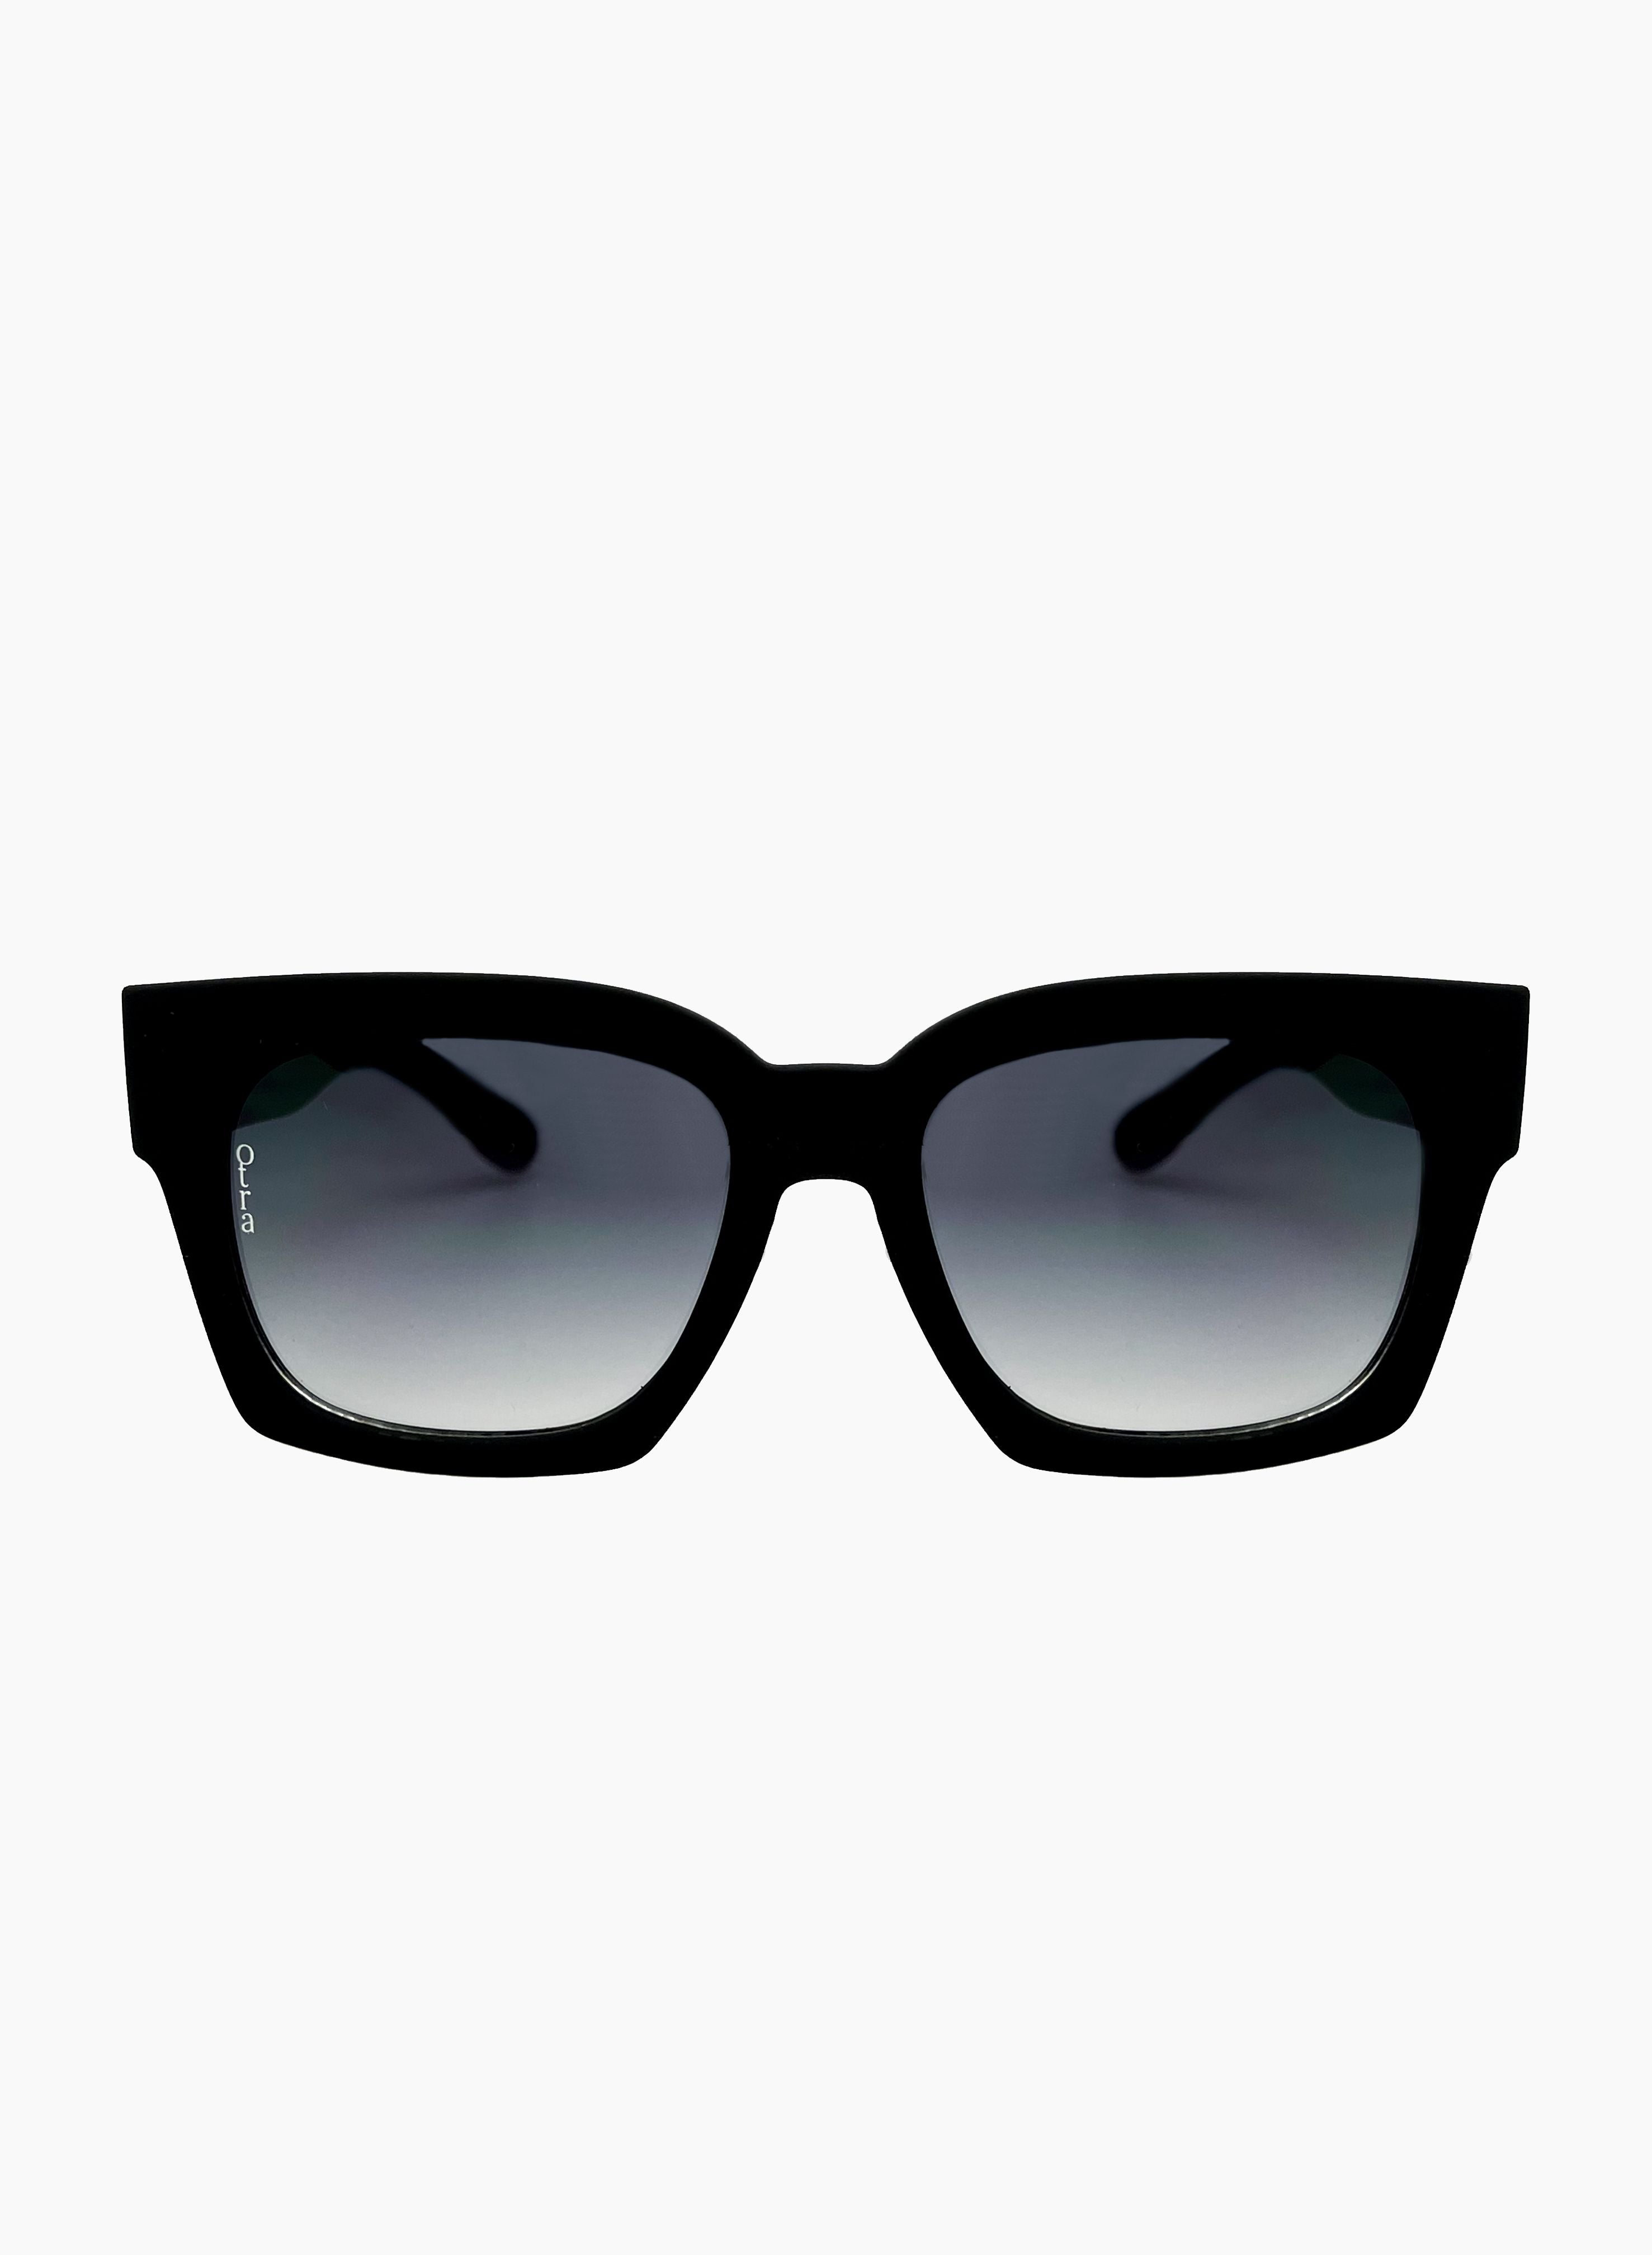 Alba Polarized Black Smoke/Tortoiseshell Sunglasses